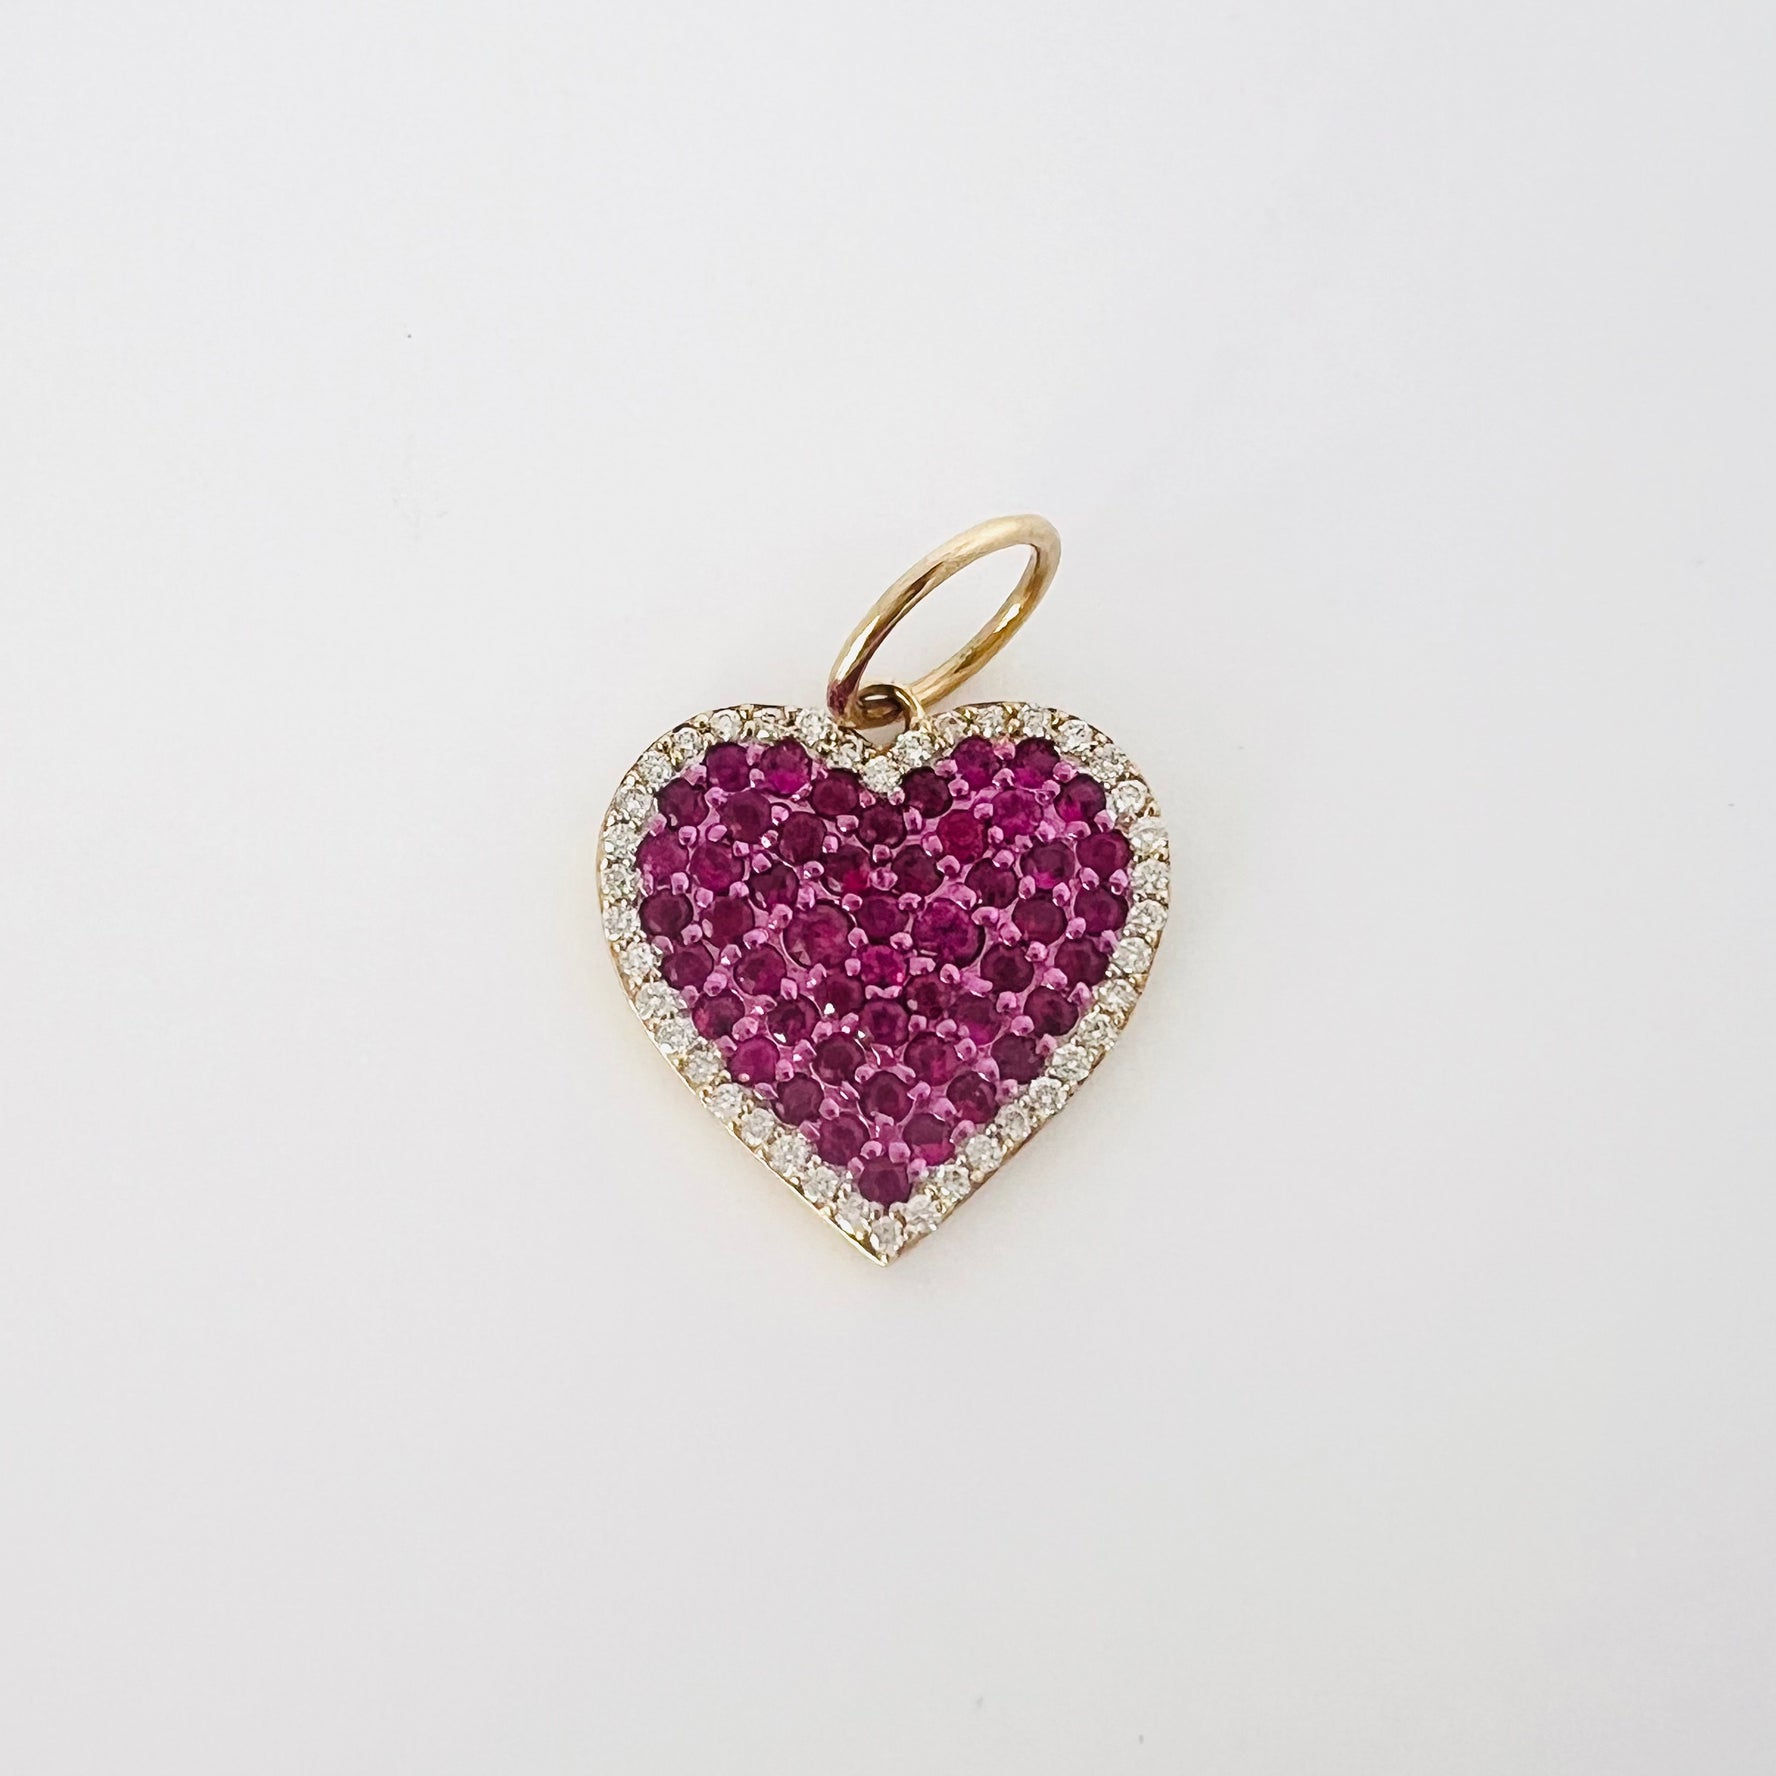 14k gold pink sapphire and diamond heart pendant/charm